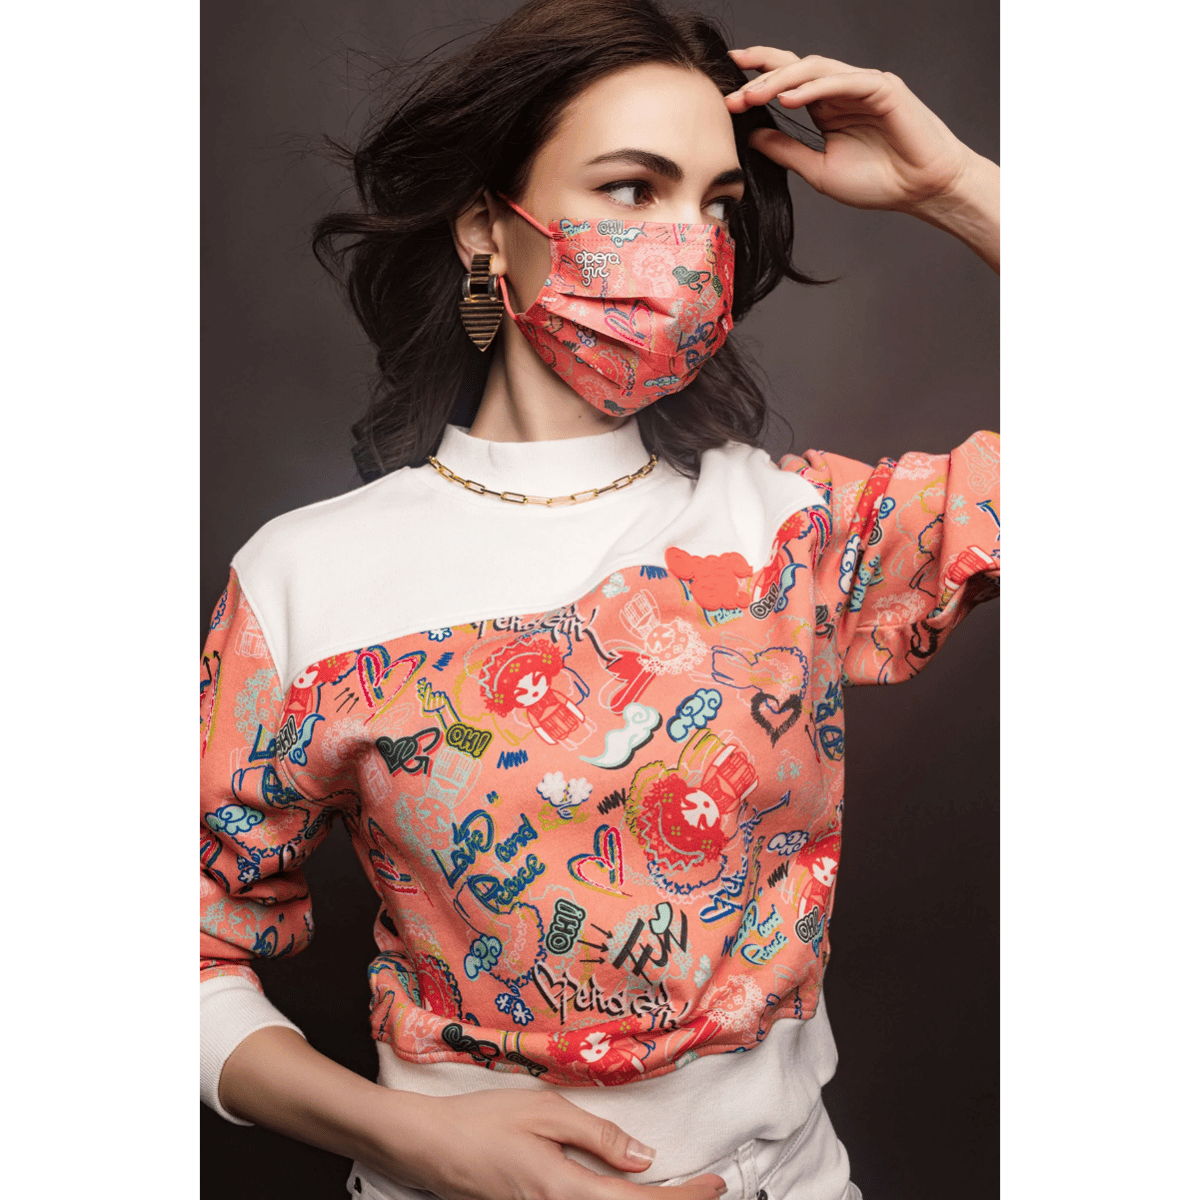 Graffiti Opera Girl （by ヴィヴィアン・タム）3層不織布マスク （1箱10枚入り/１枚ずつ個包装）サイズ：175mm x 95mm